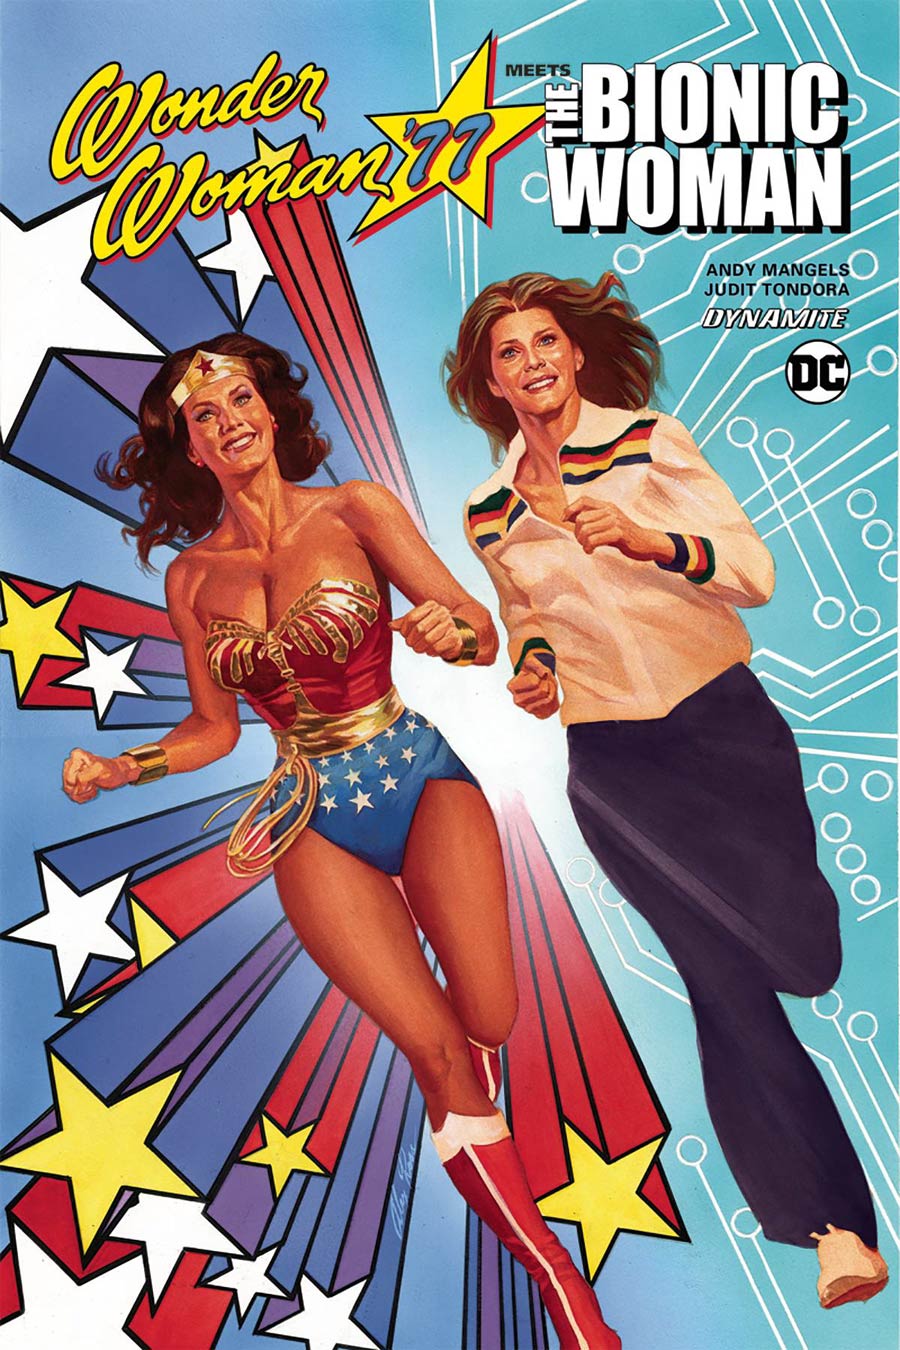 Wonder Woman 77 Meets The Bionic Woman TP